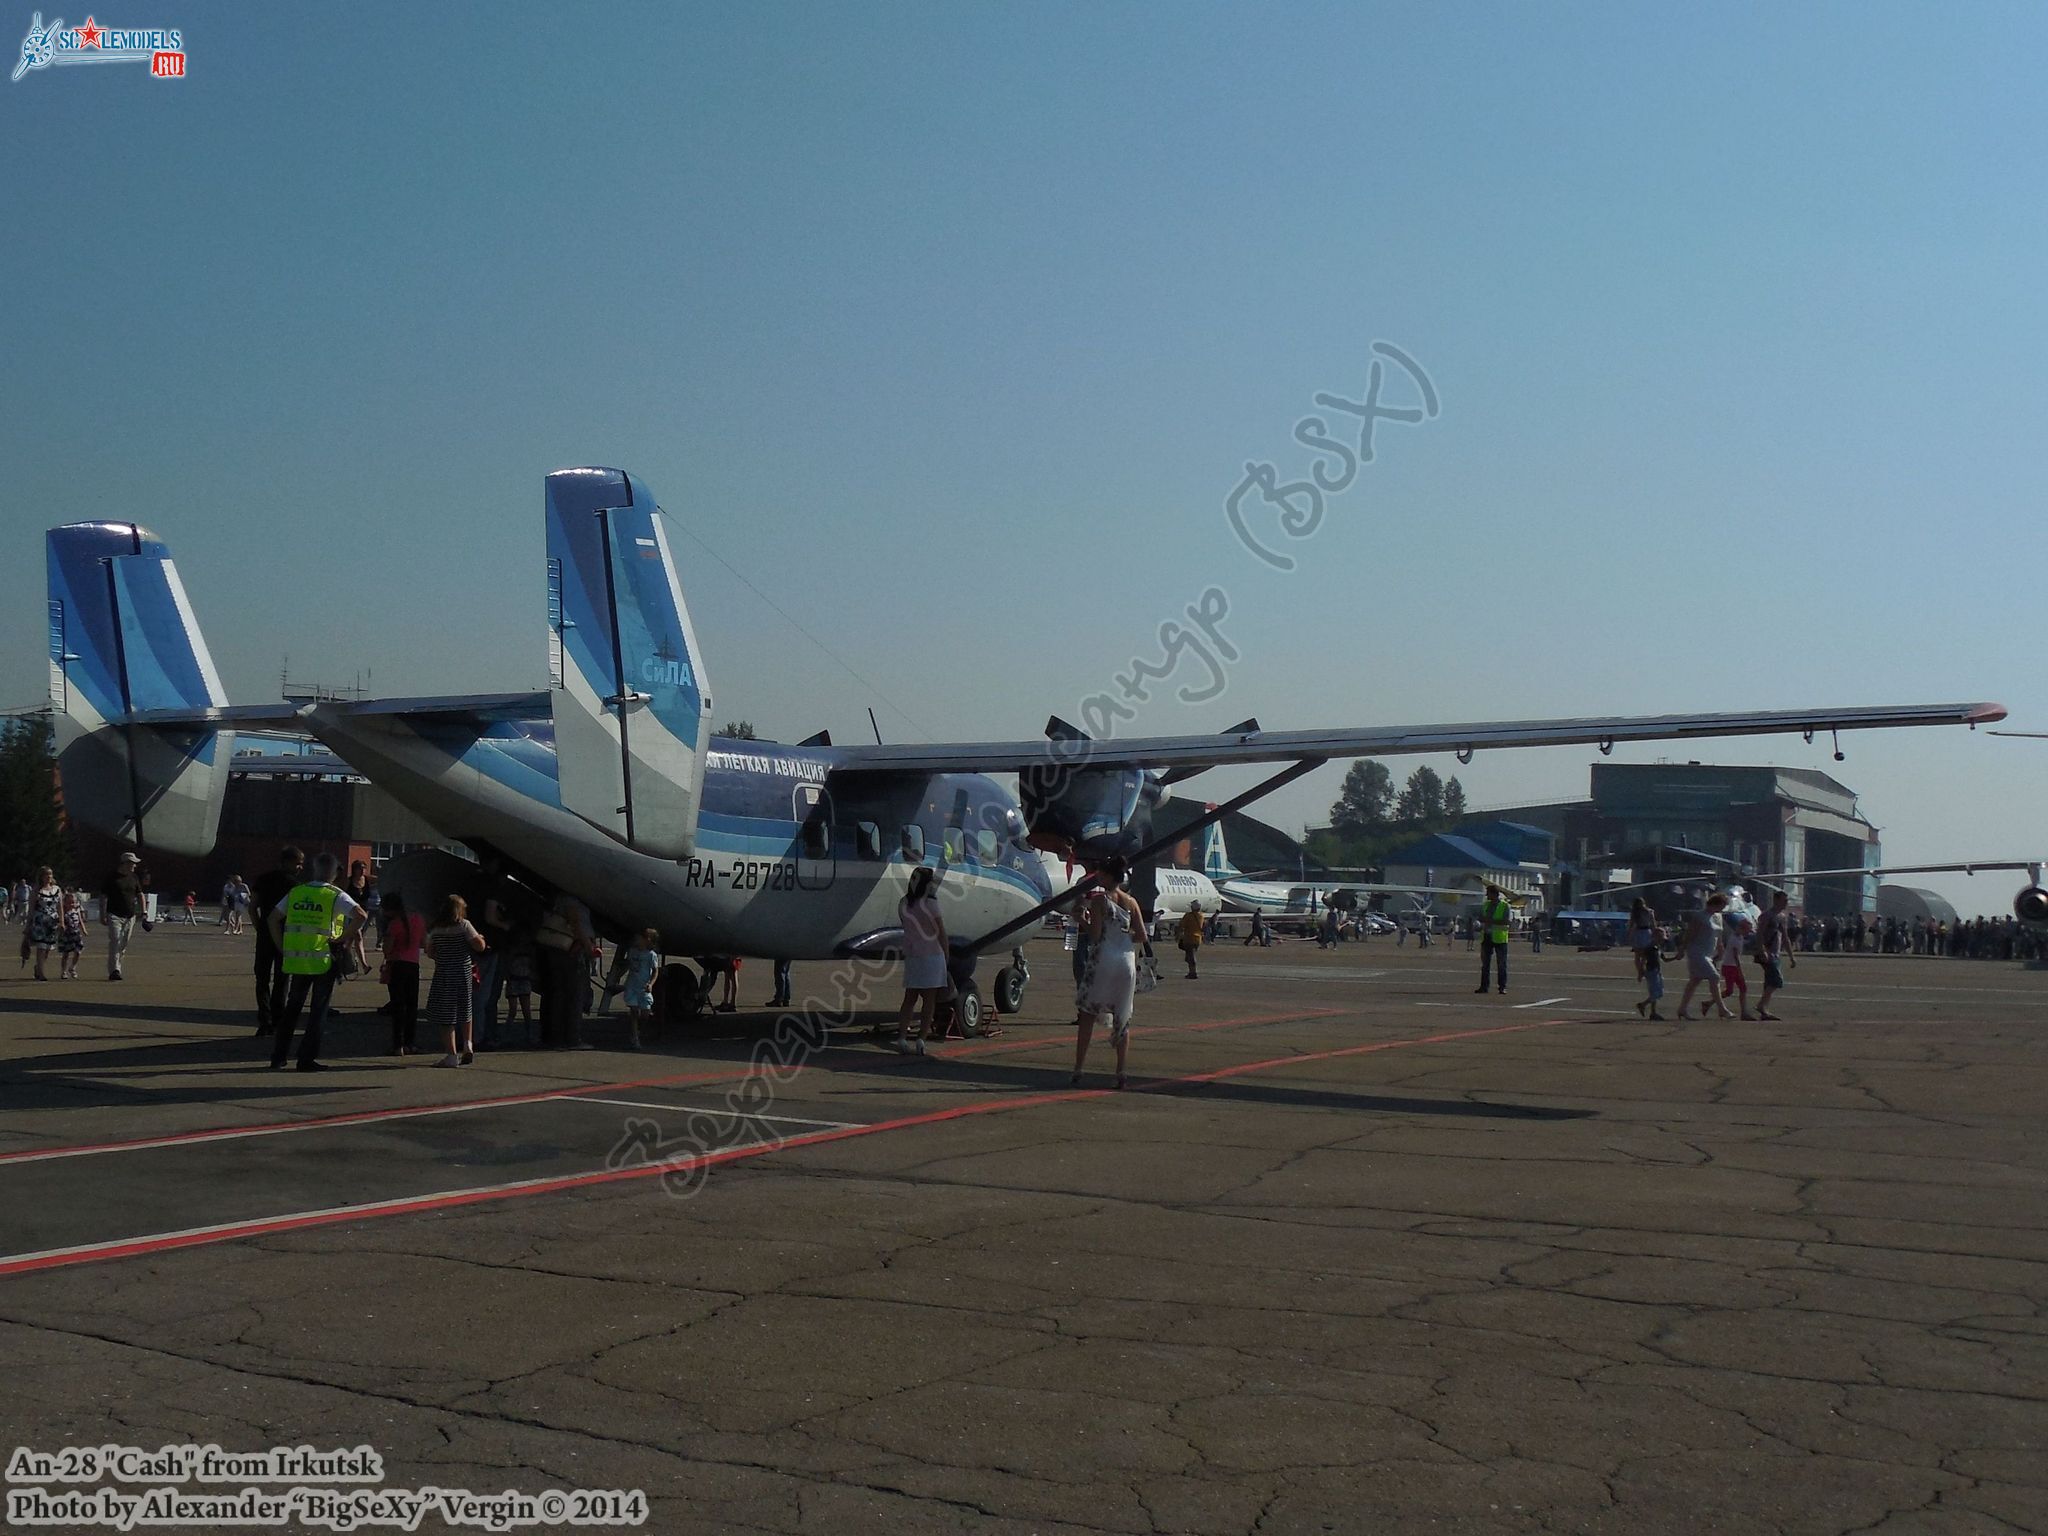 An-28 (RA-28728)_Irkutsk_013